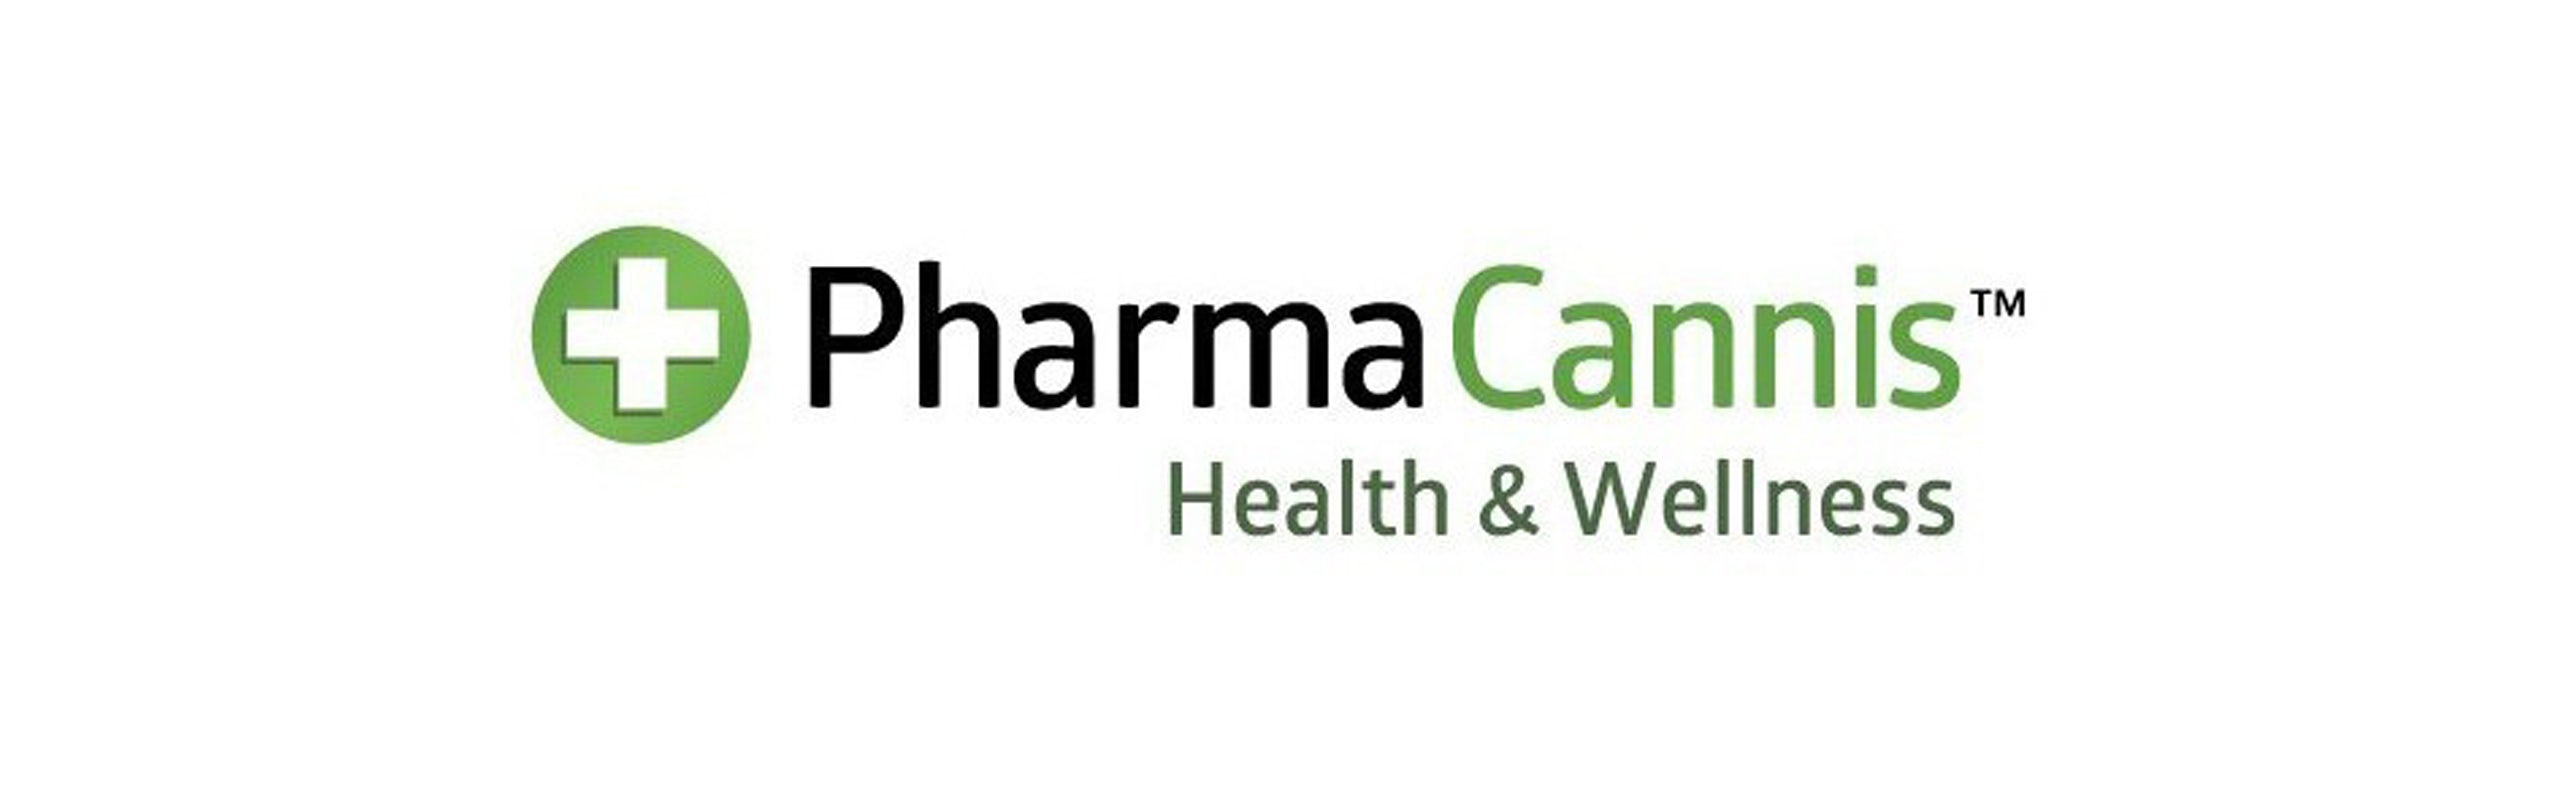 PharmaCannis banner